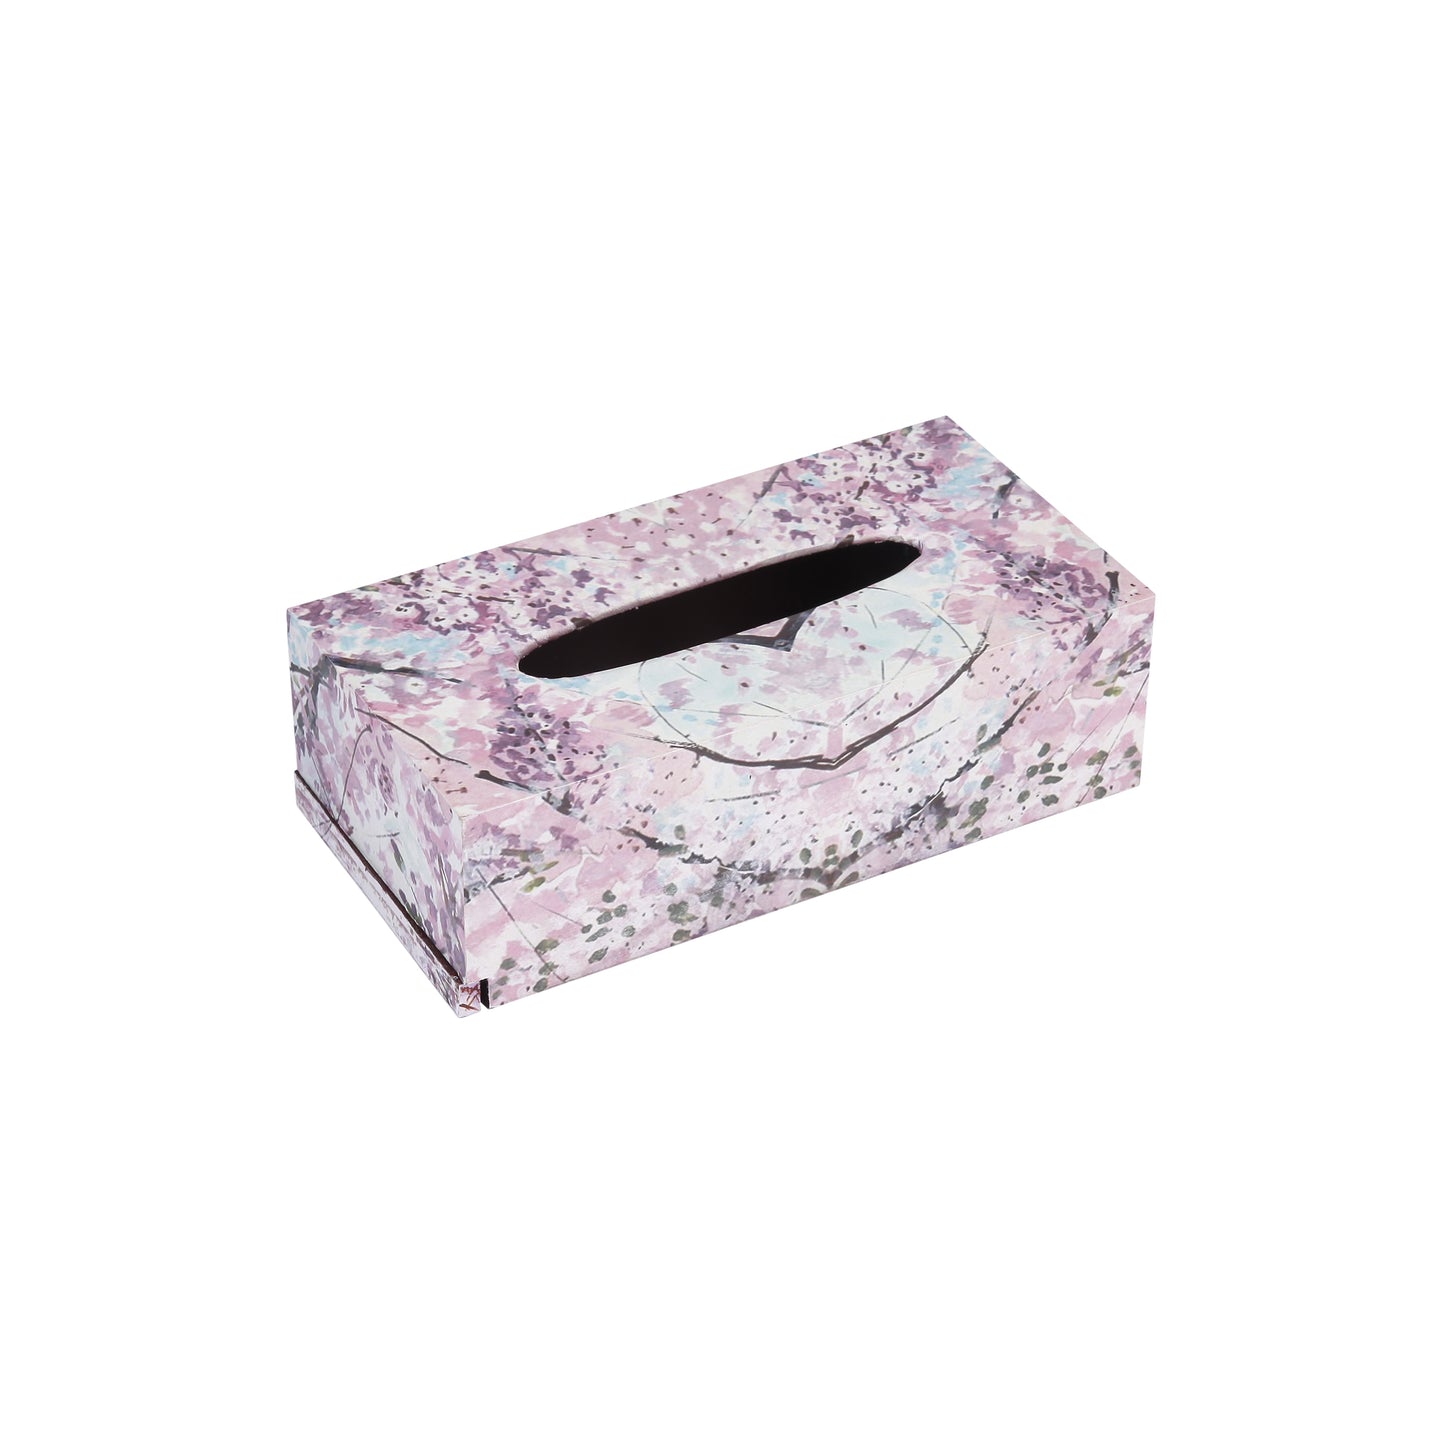 A Tiny Mistake Wisteria Rectangle Tissue Box, 26 x 13 x 8 cm